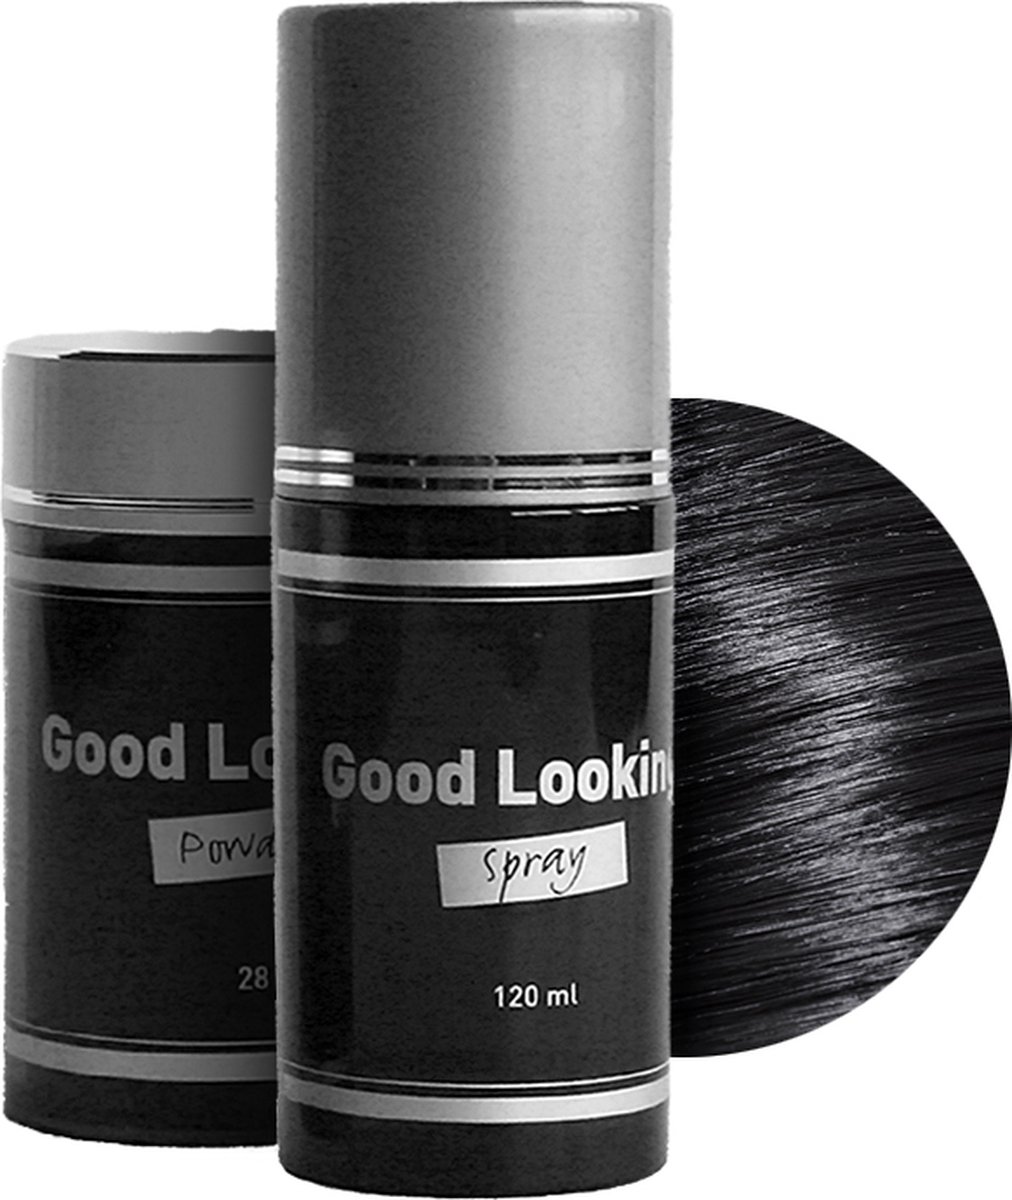 Good Looking-1 Spray + 1 Powder-Black